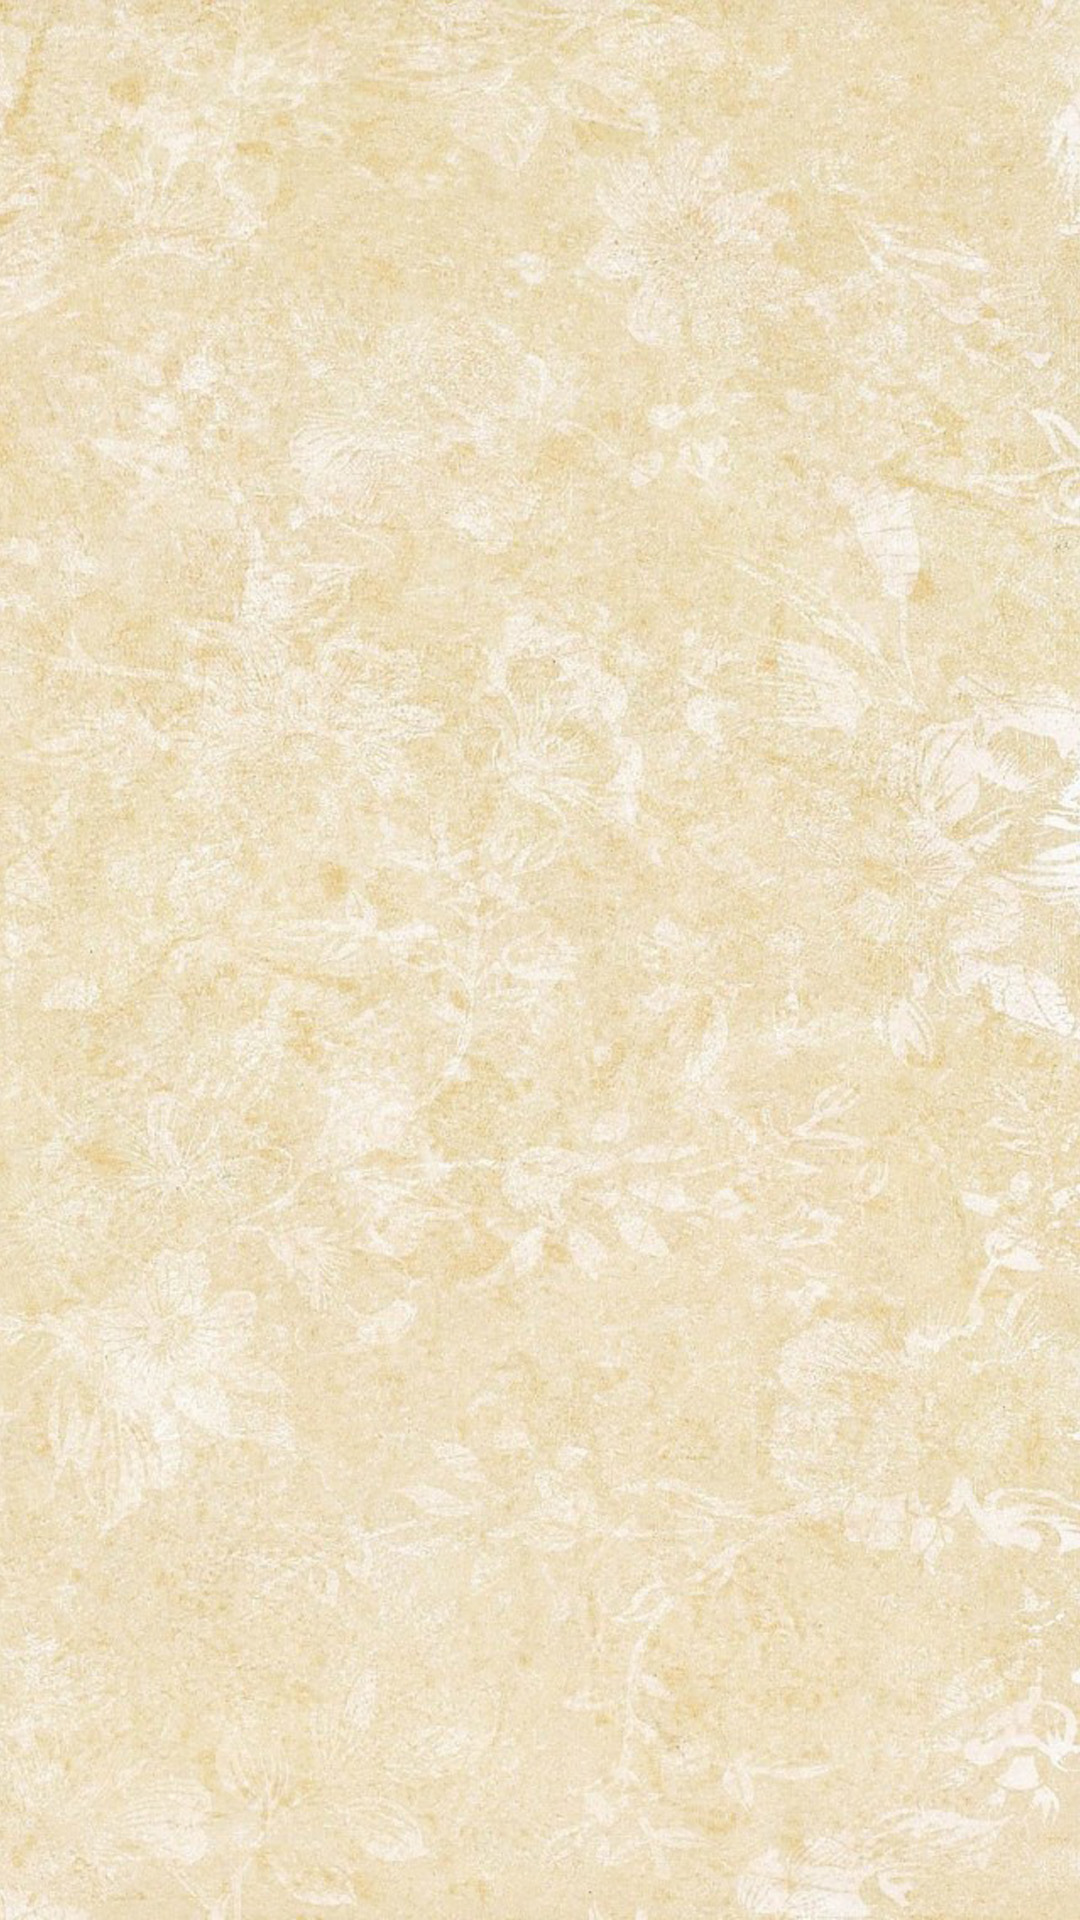 White Flower Texture iPhone Plus Wallpaper